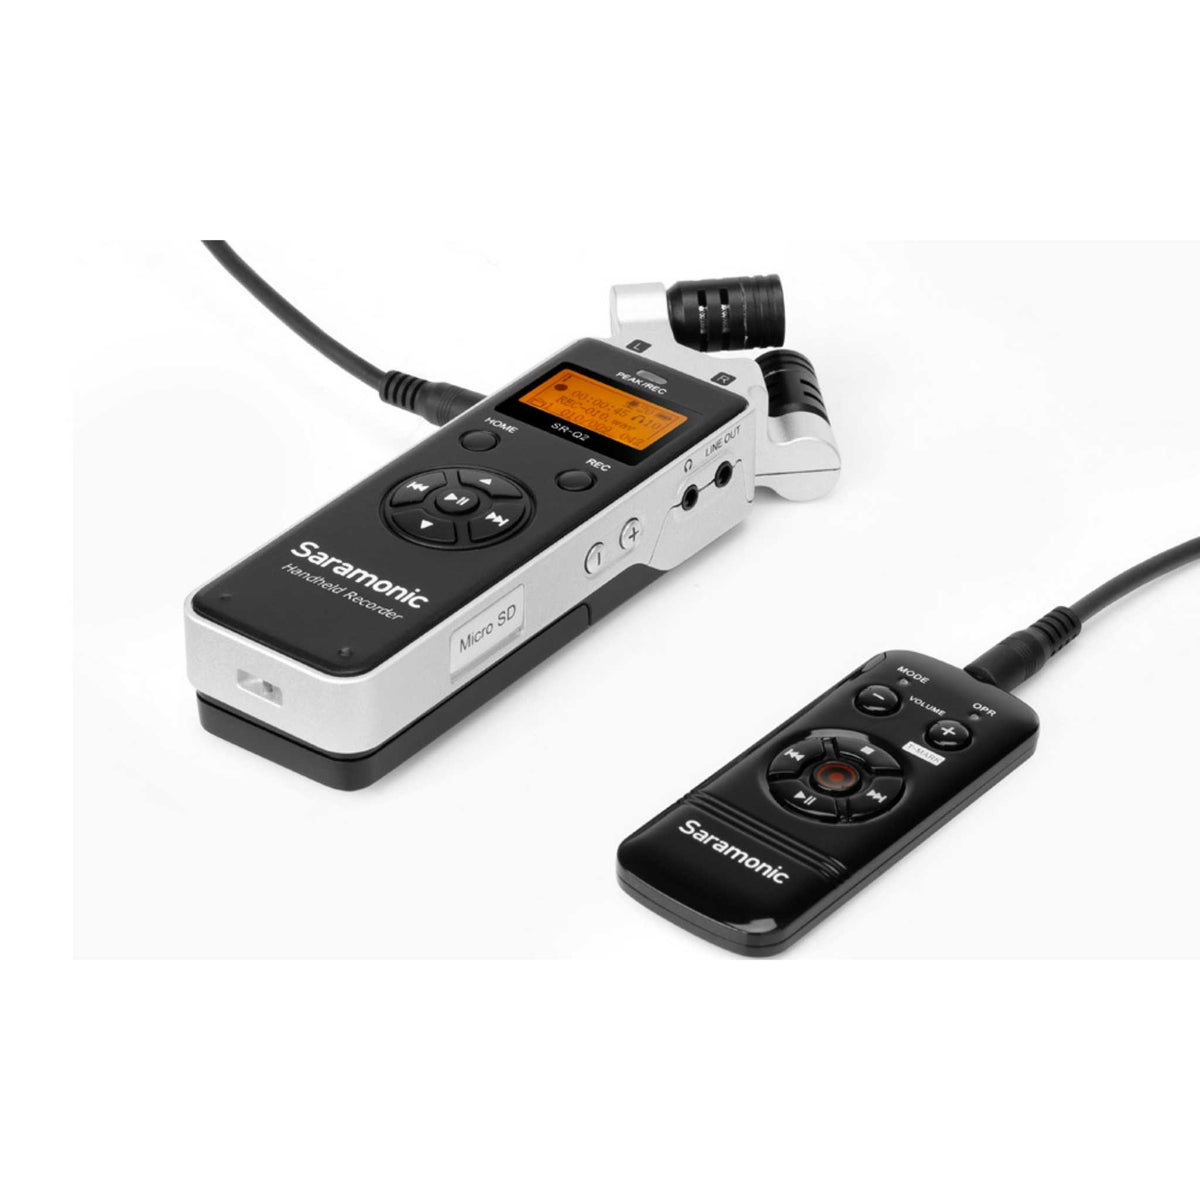 Saramonic SR-Q2 handheld audio recorder